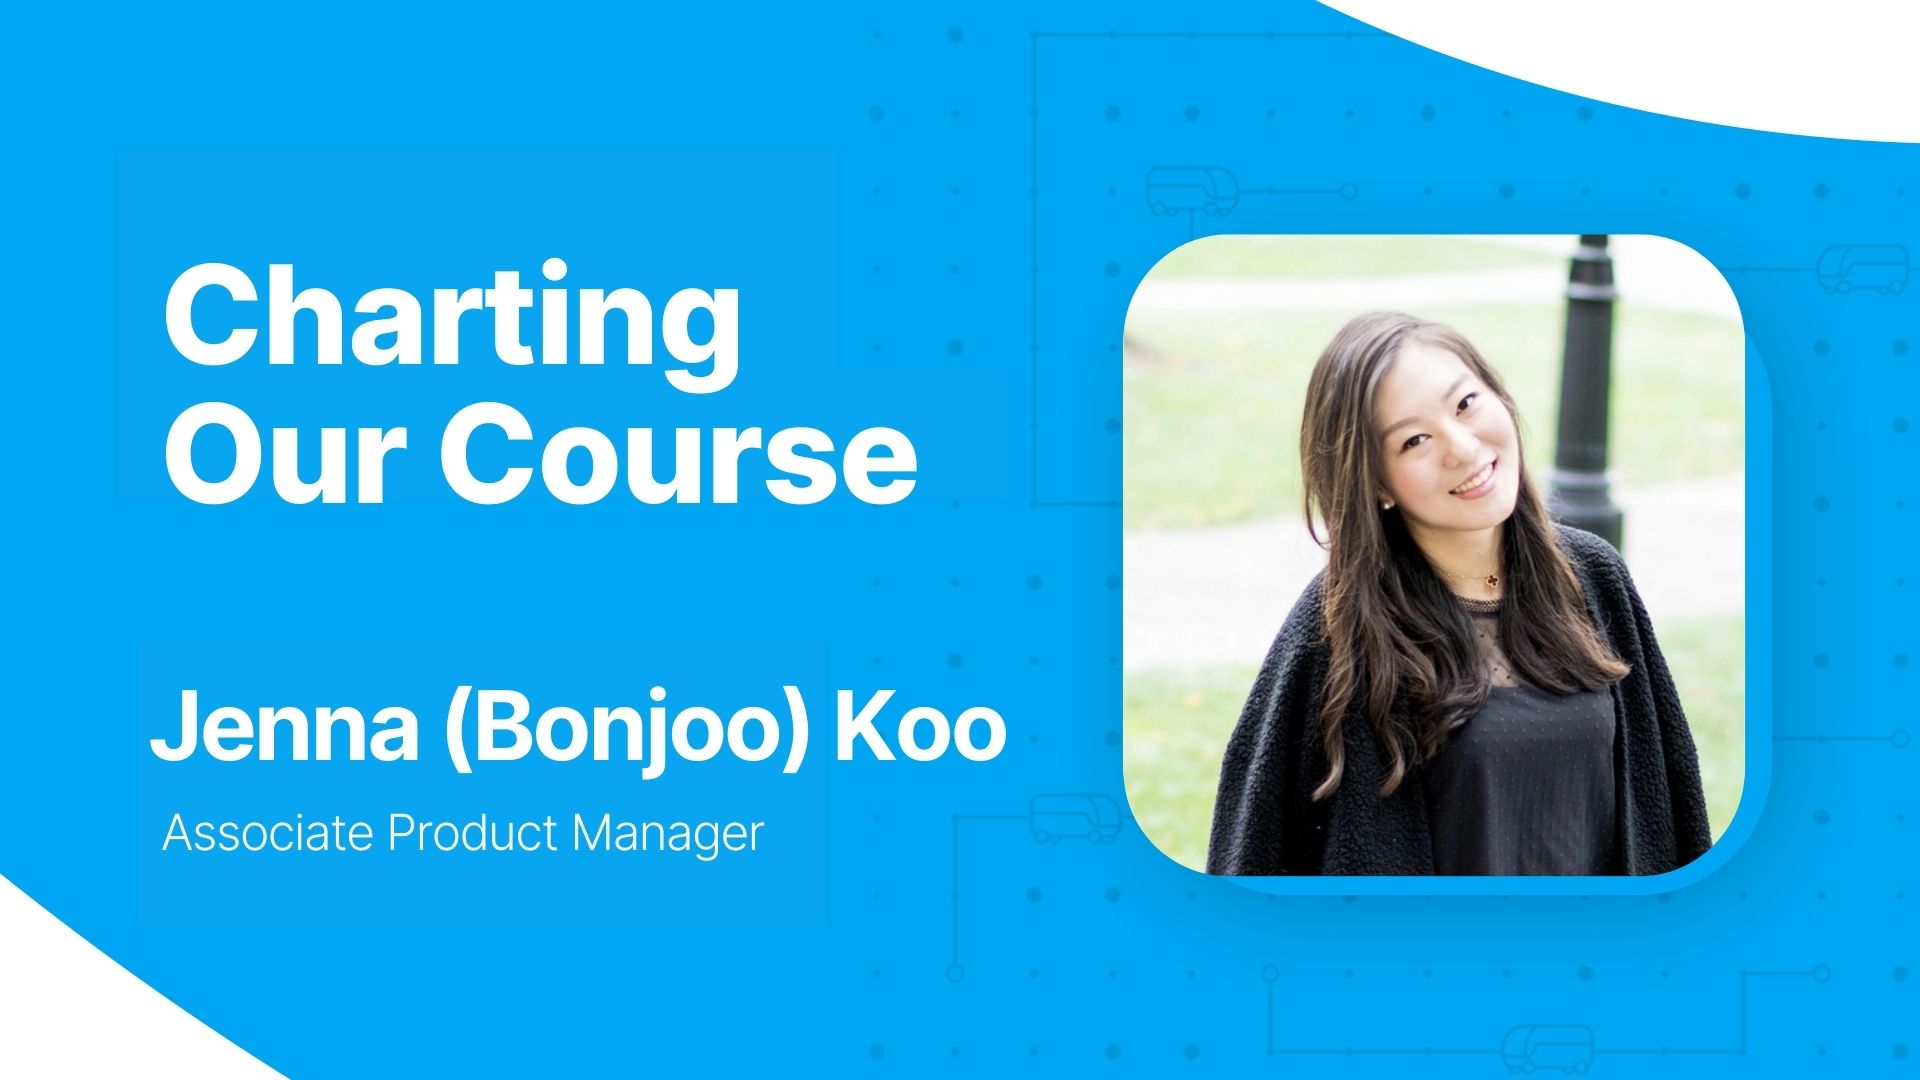 Jenna (Bonjoo) Koo is CharterUP's associate product manager.